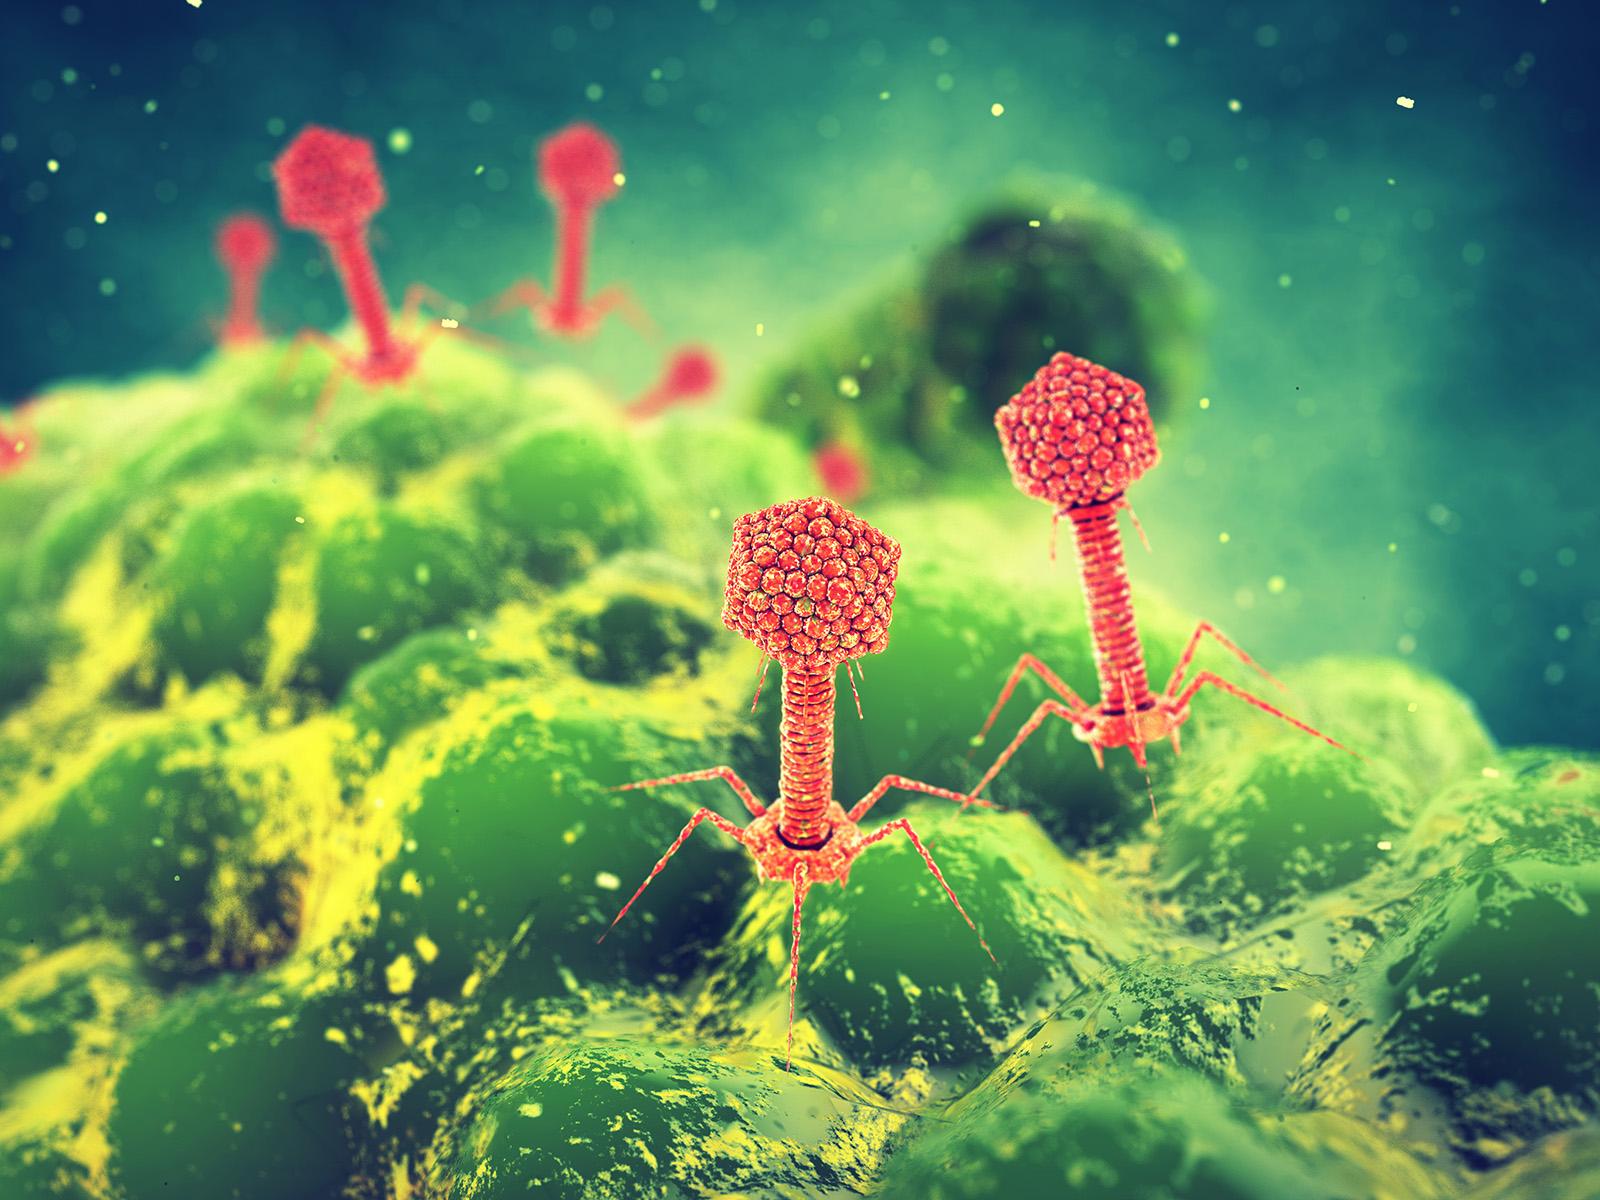 Viruses and microbes